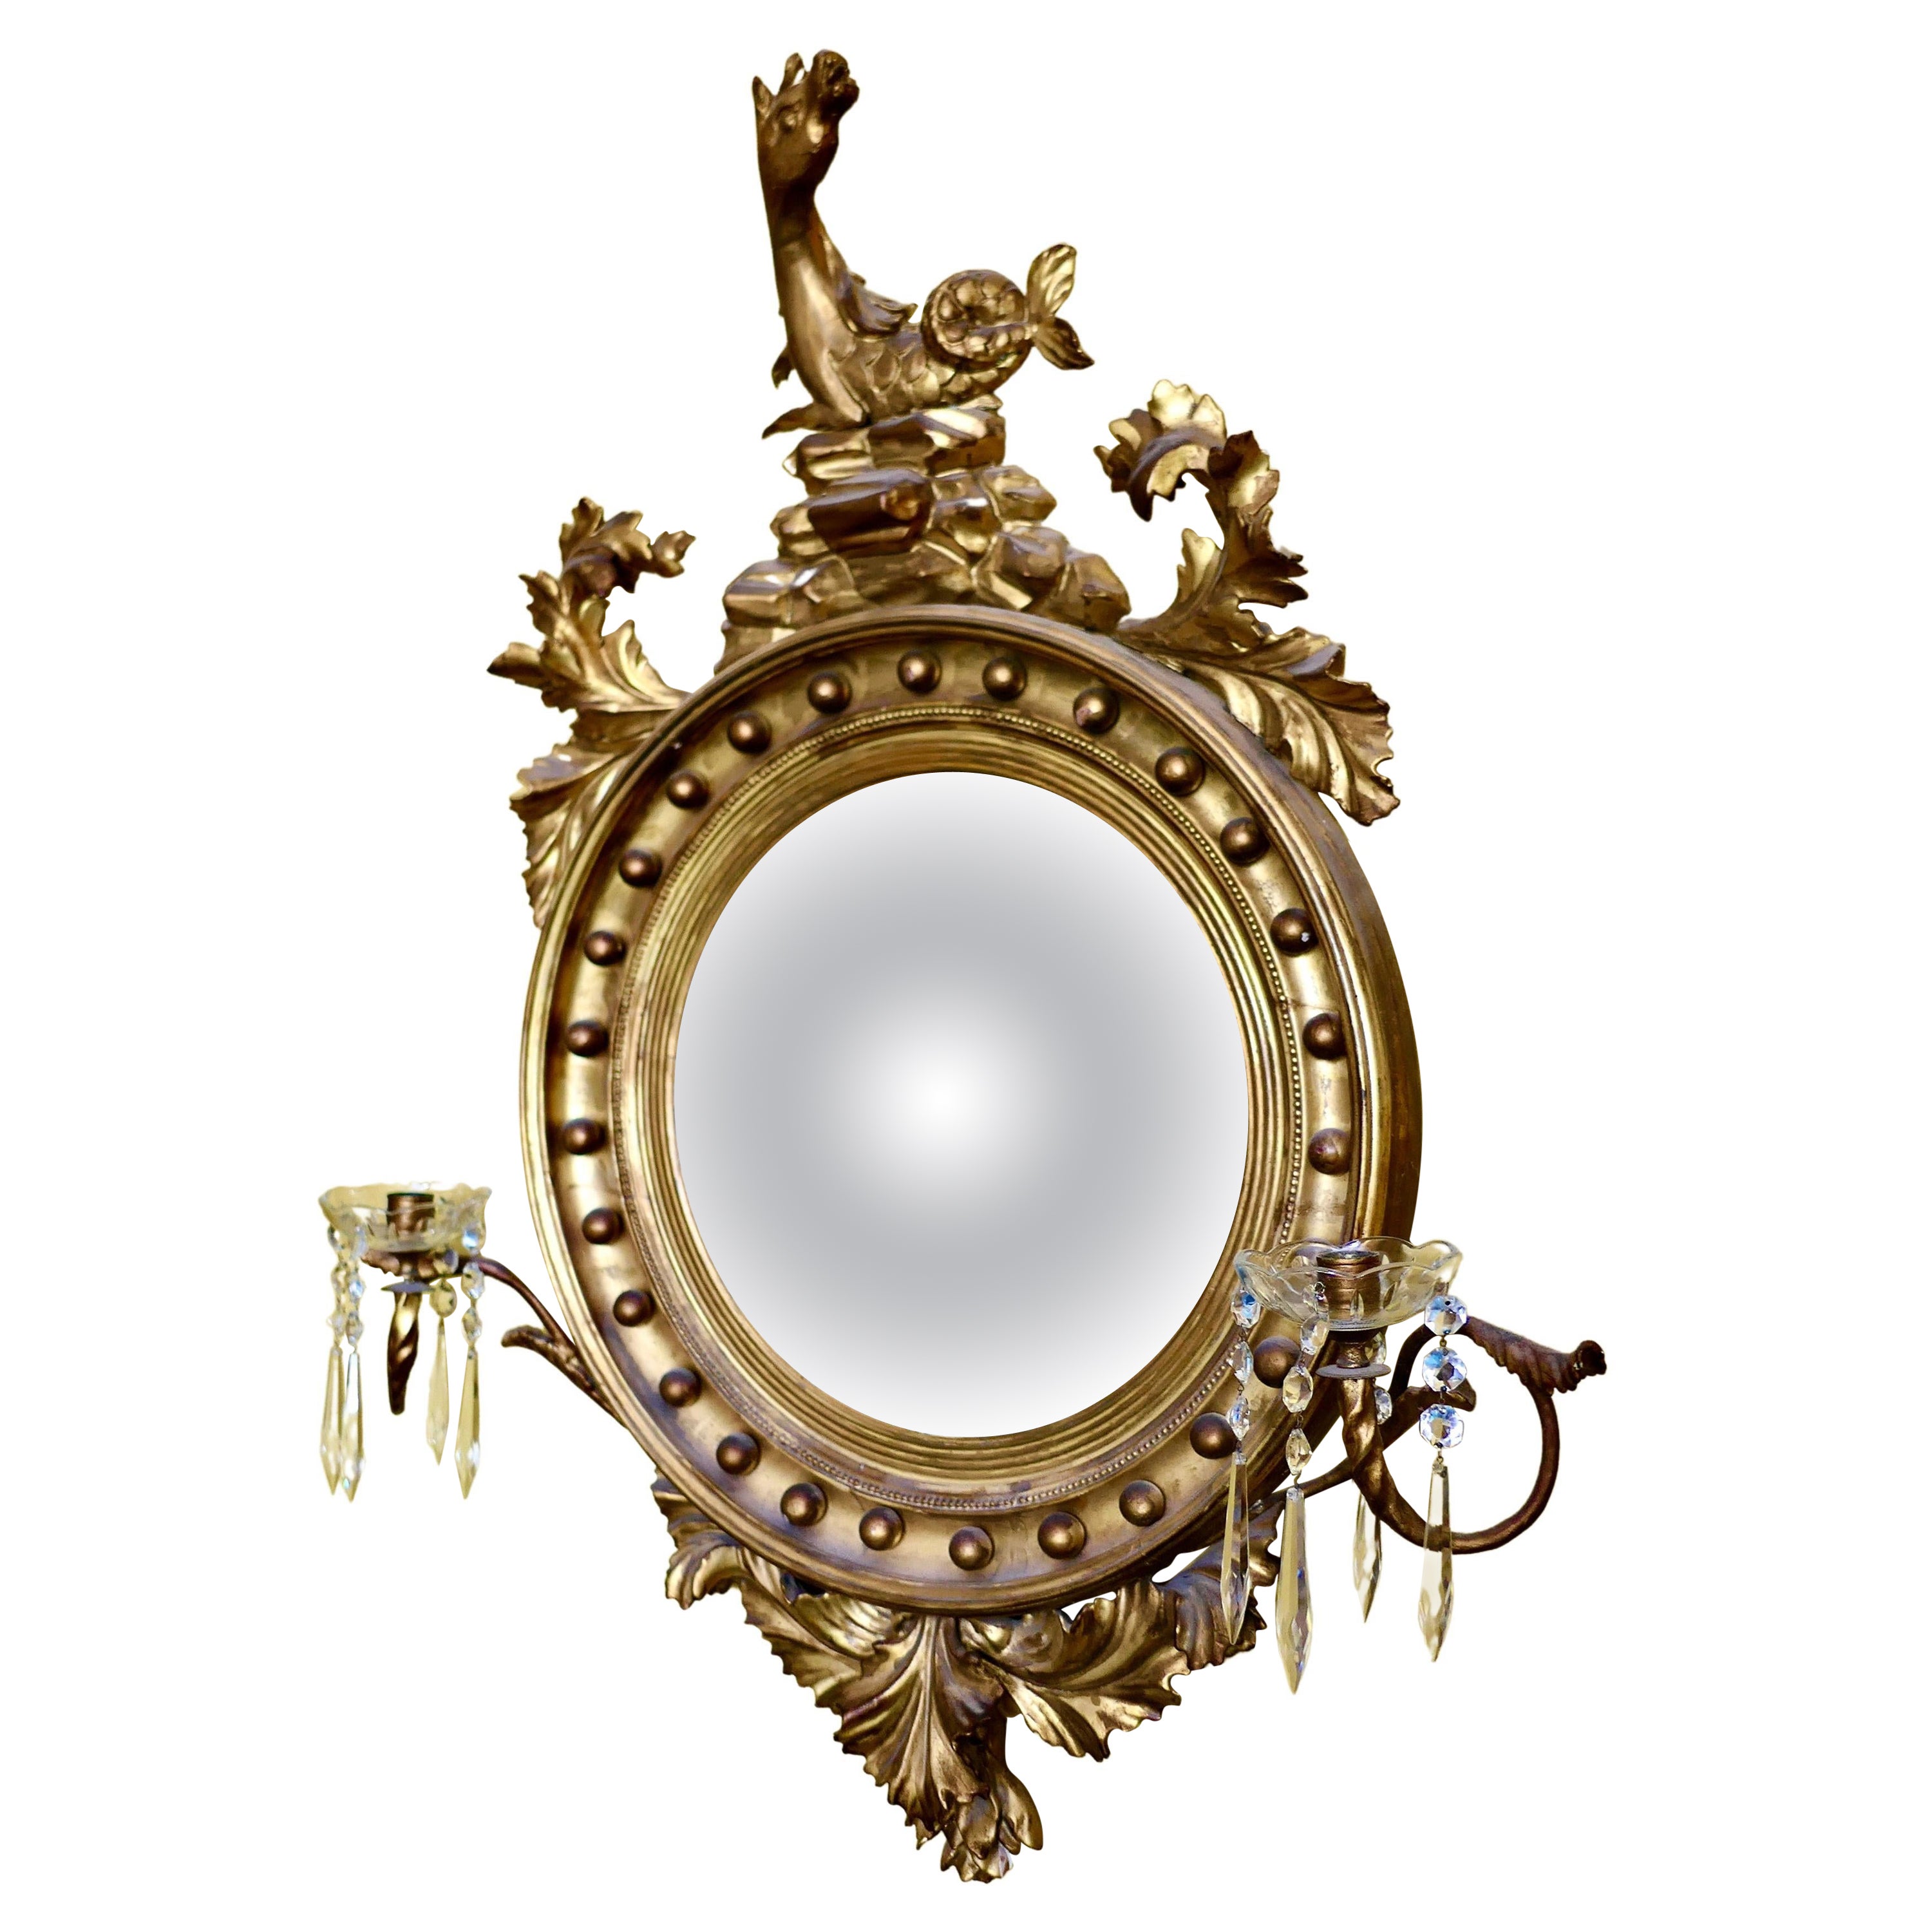 A Large Regency Convex Gilt Girandole Wall Mirror    